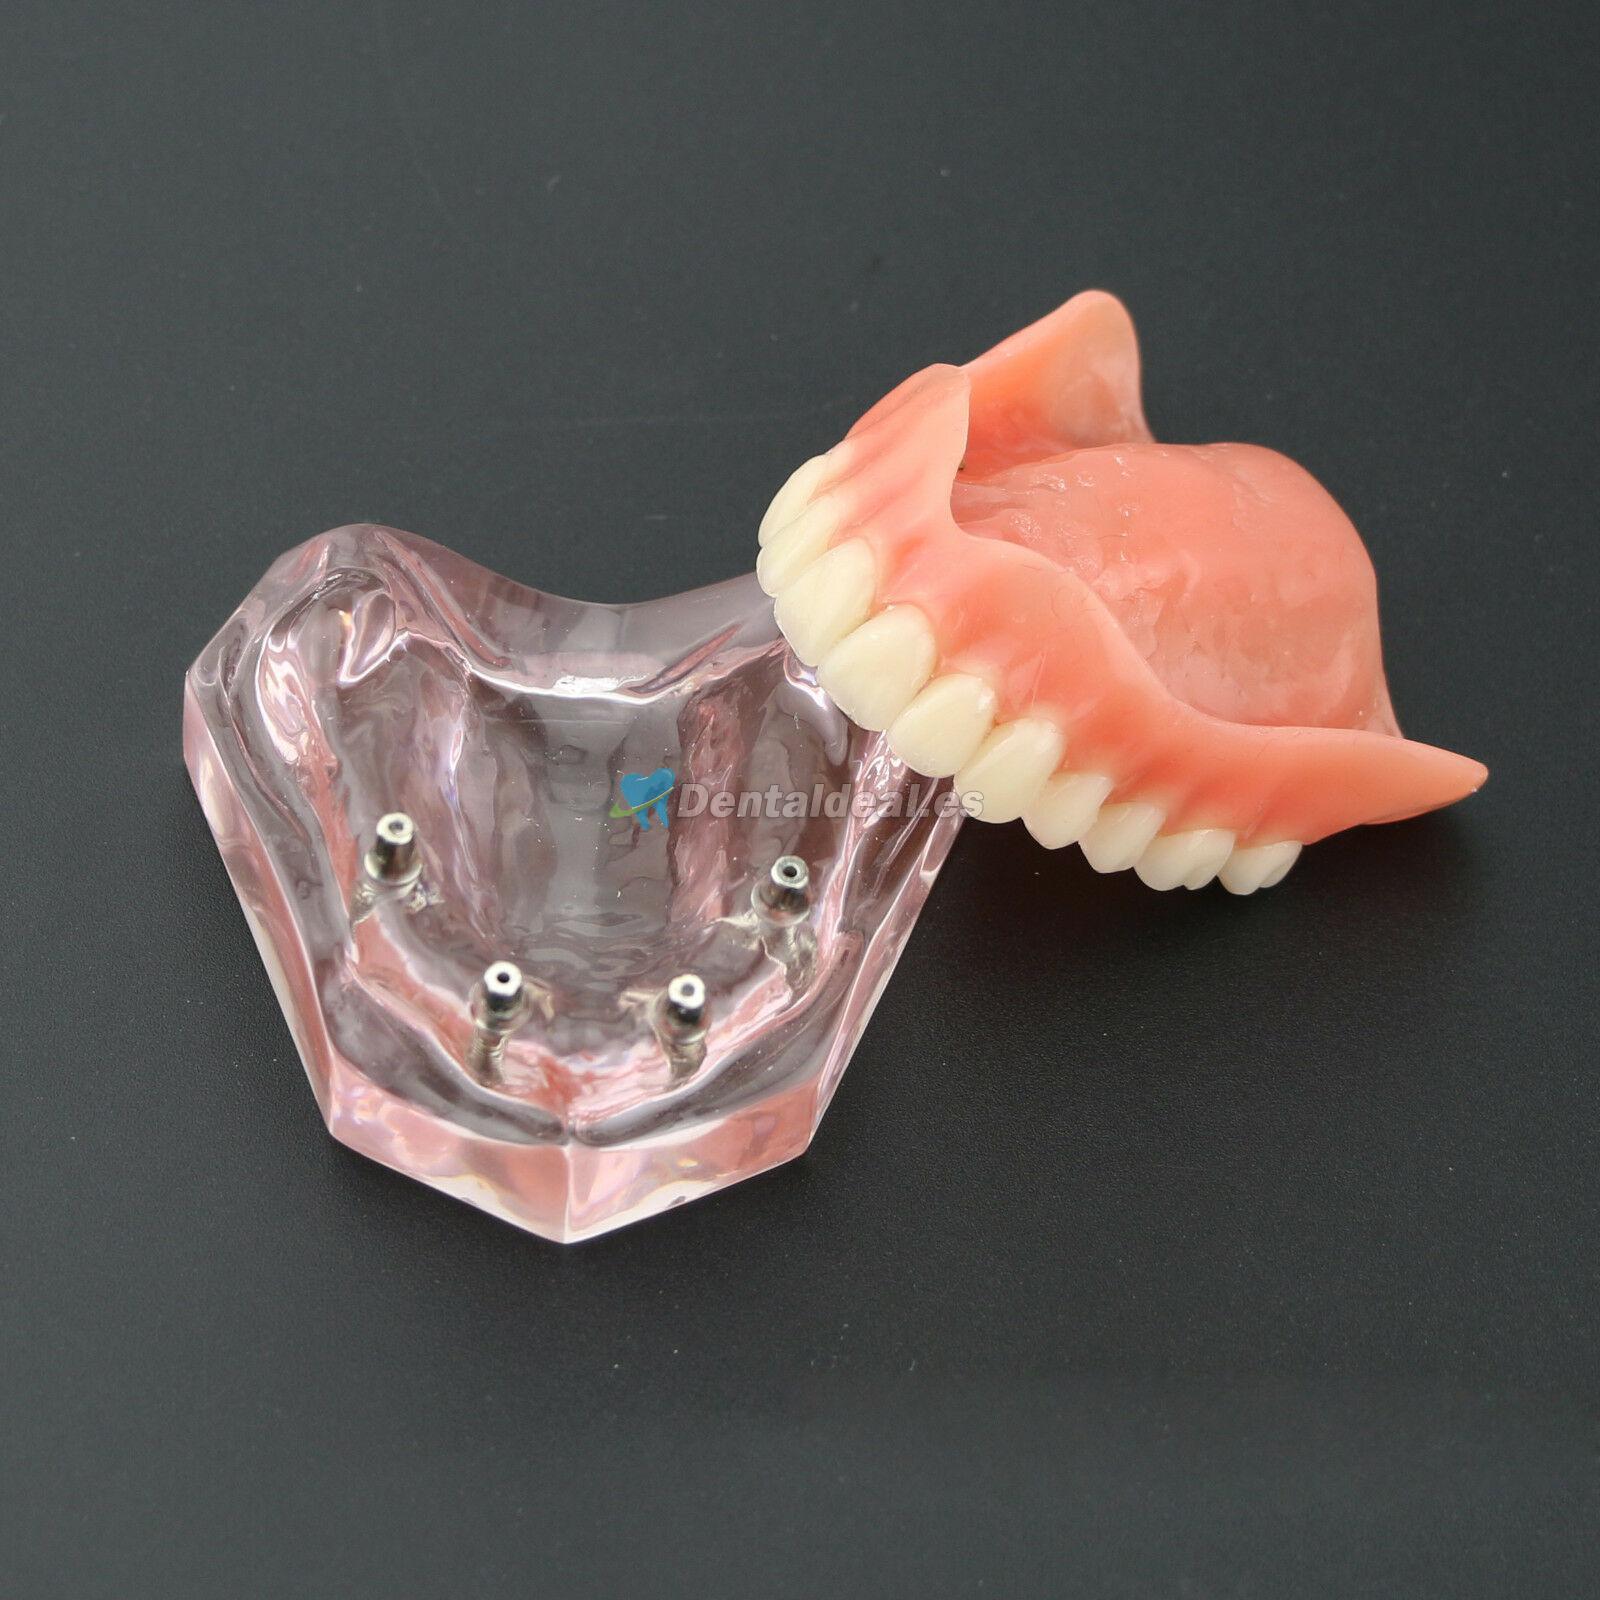 Dental 4 implantes Demostración Superior Modelo de sobredentadura superior 6001 01